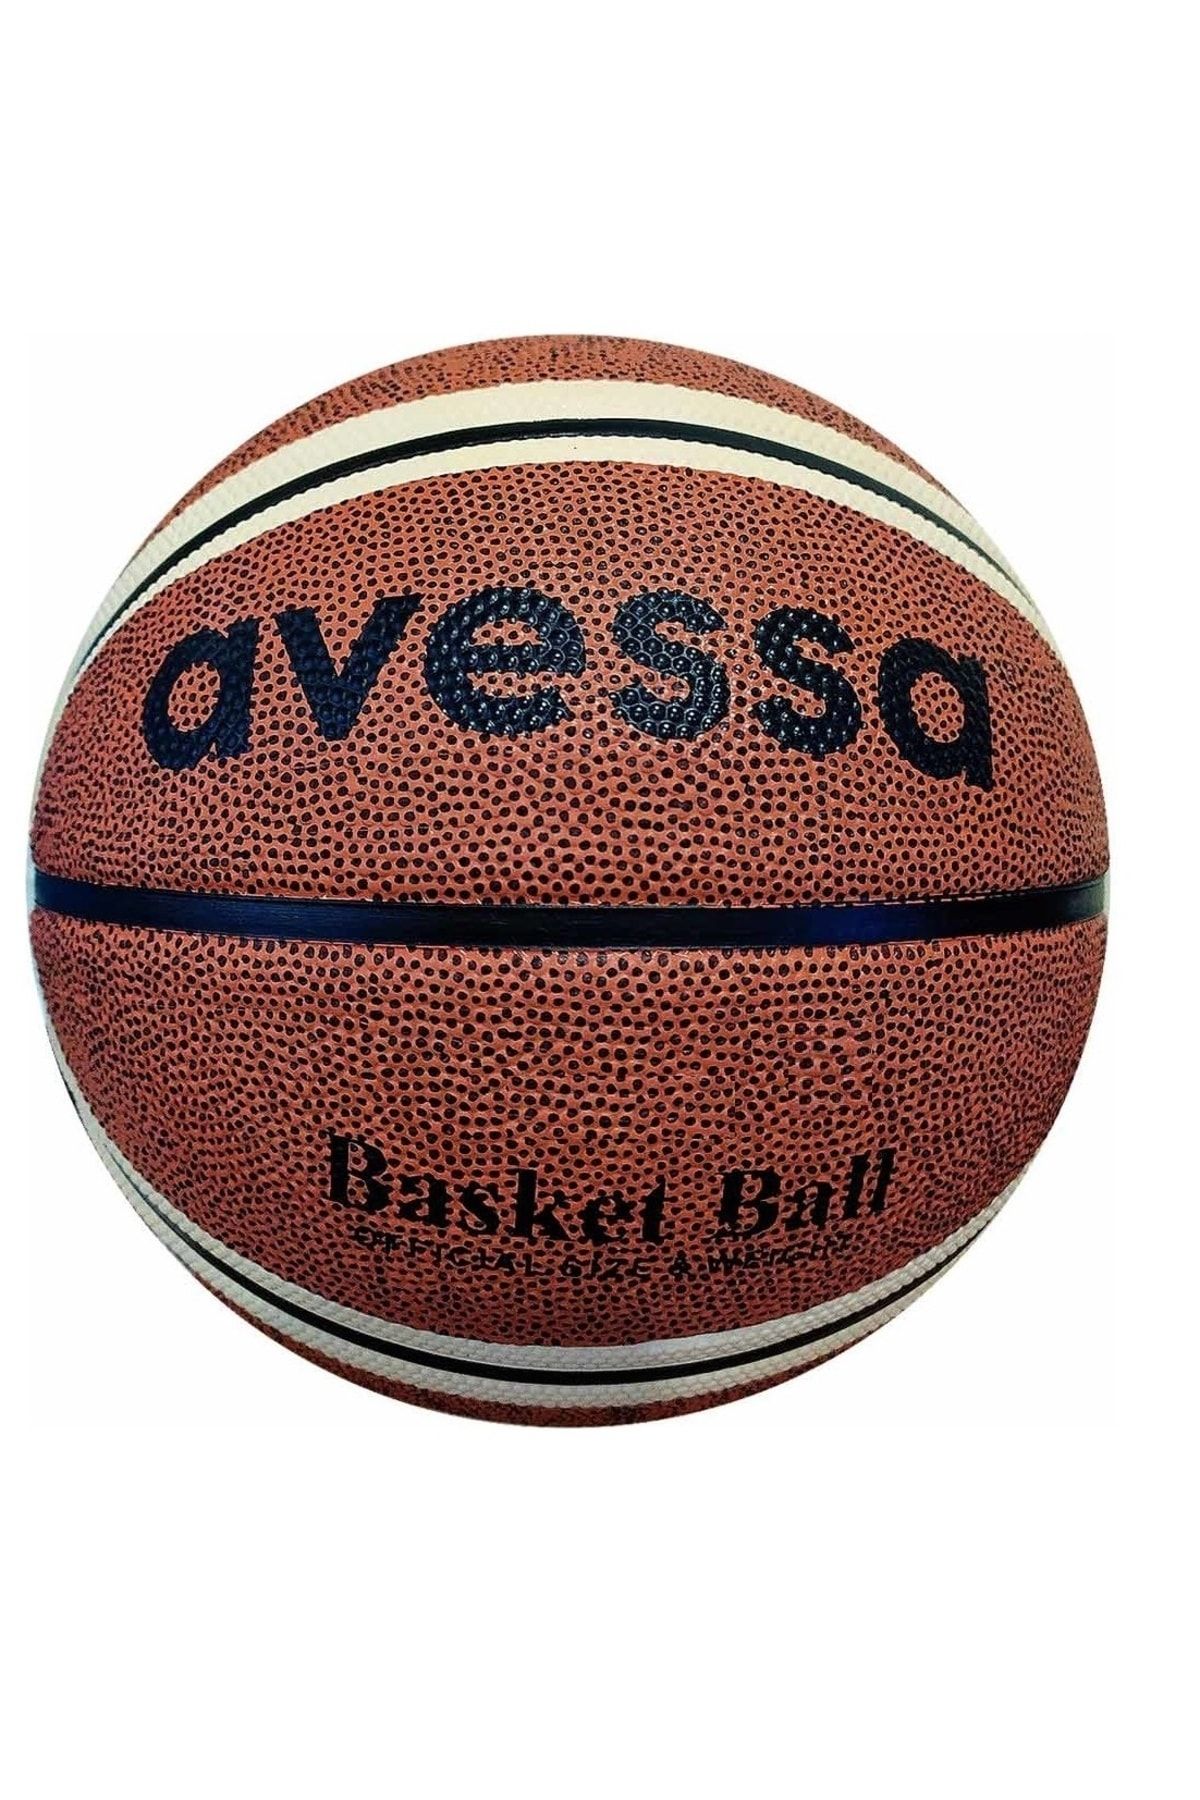 Avessa Bt-170 Outdoor Kauçuk 8 Panel Basketbol Topu Unisex